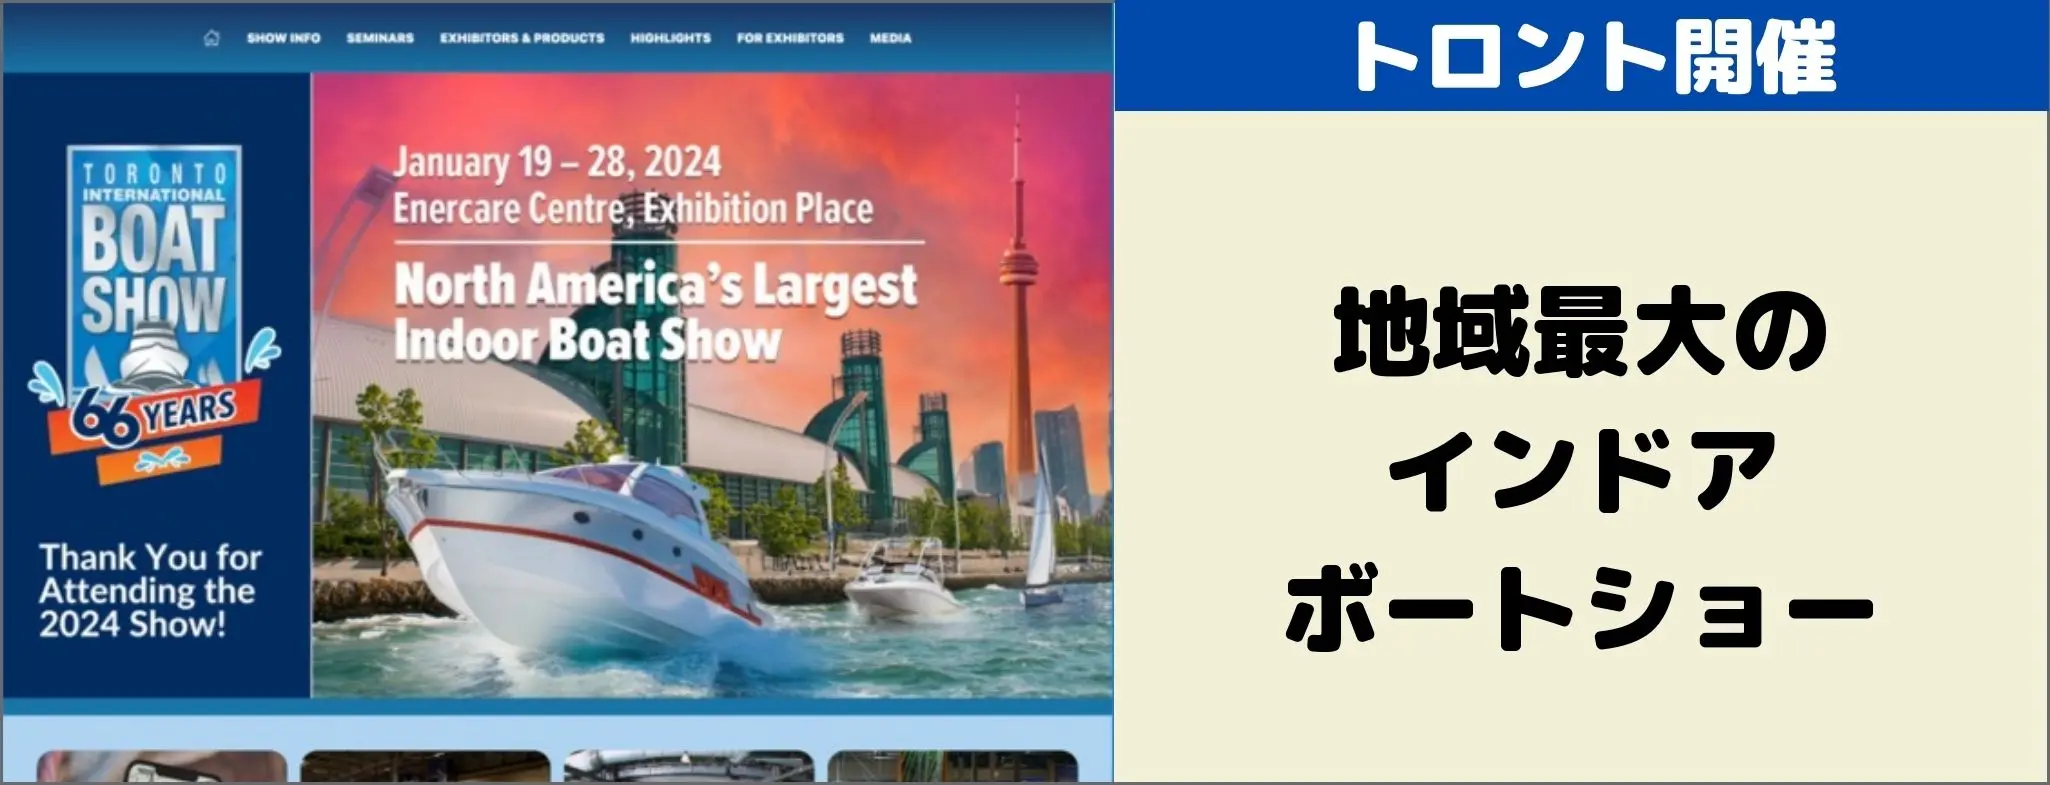 Toronto International Boat Show 2025 イベントグローブ